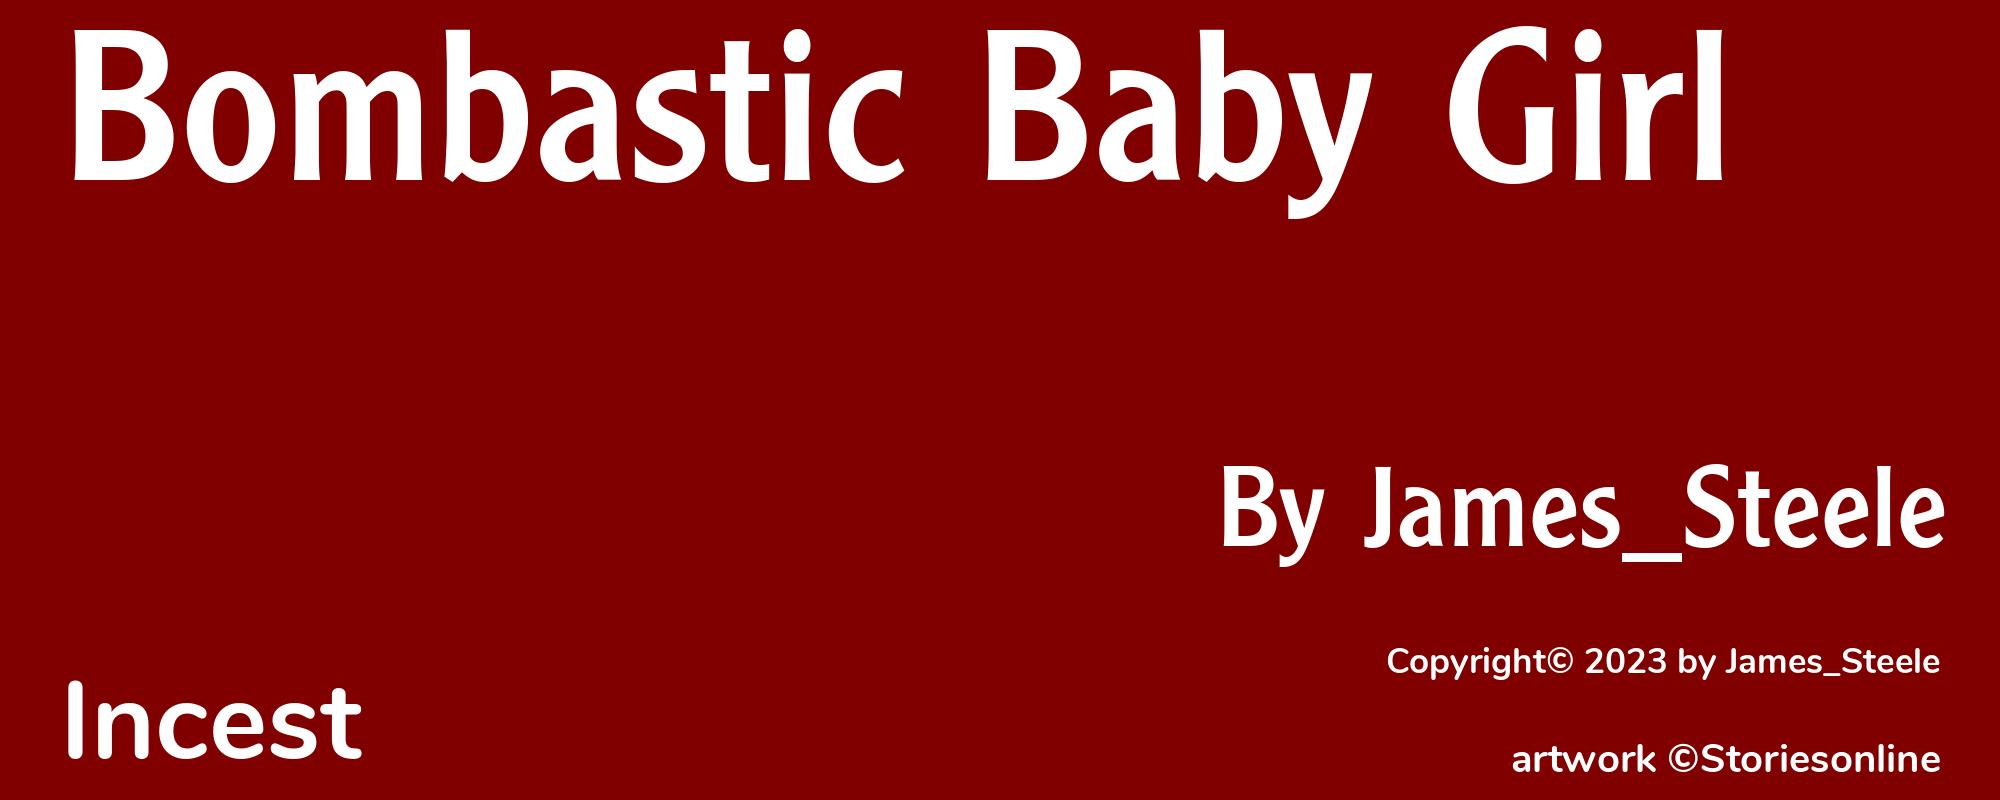 Bombastic Baby Girl - Cover